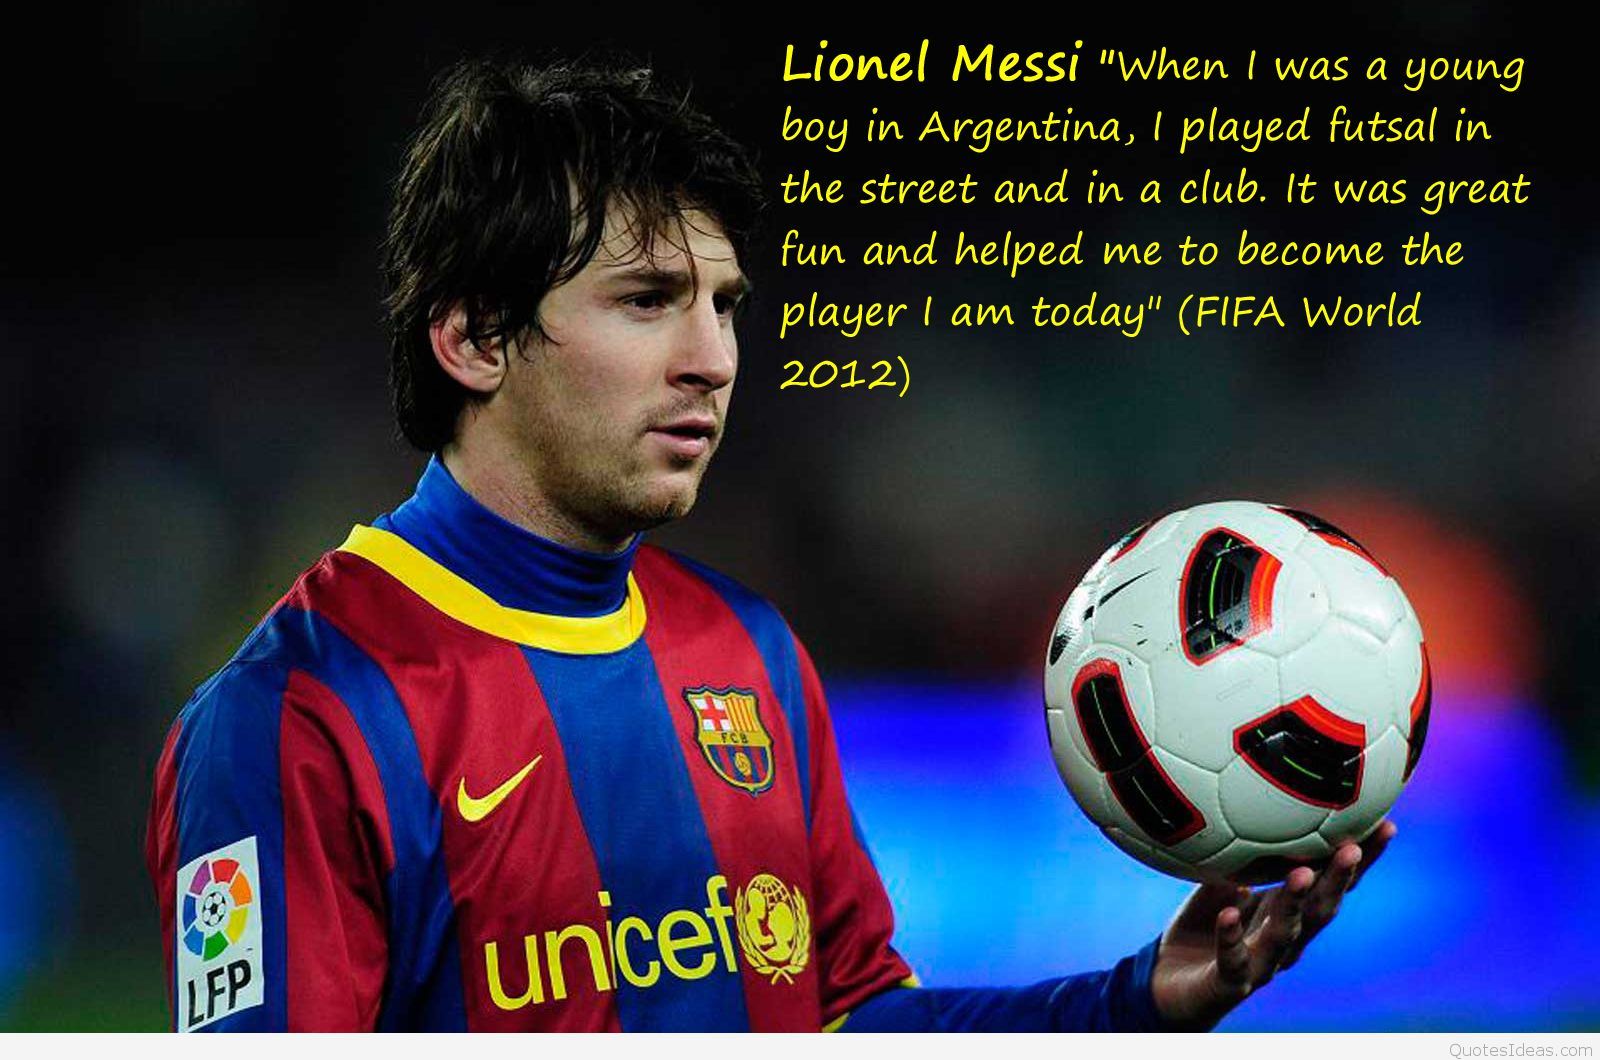 Funny Messi vs Ronaldo facts, quotes, picture wallpaper